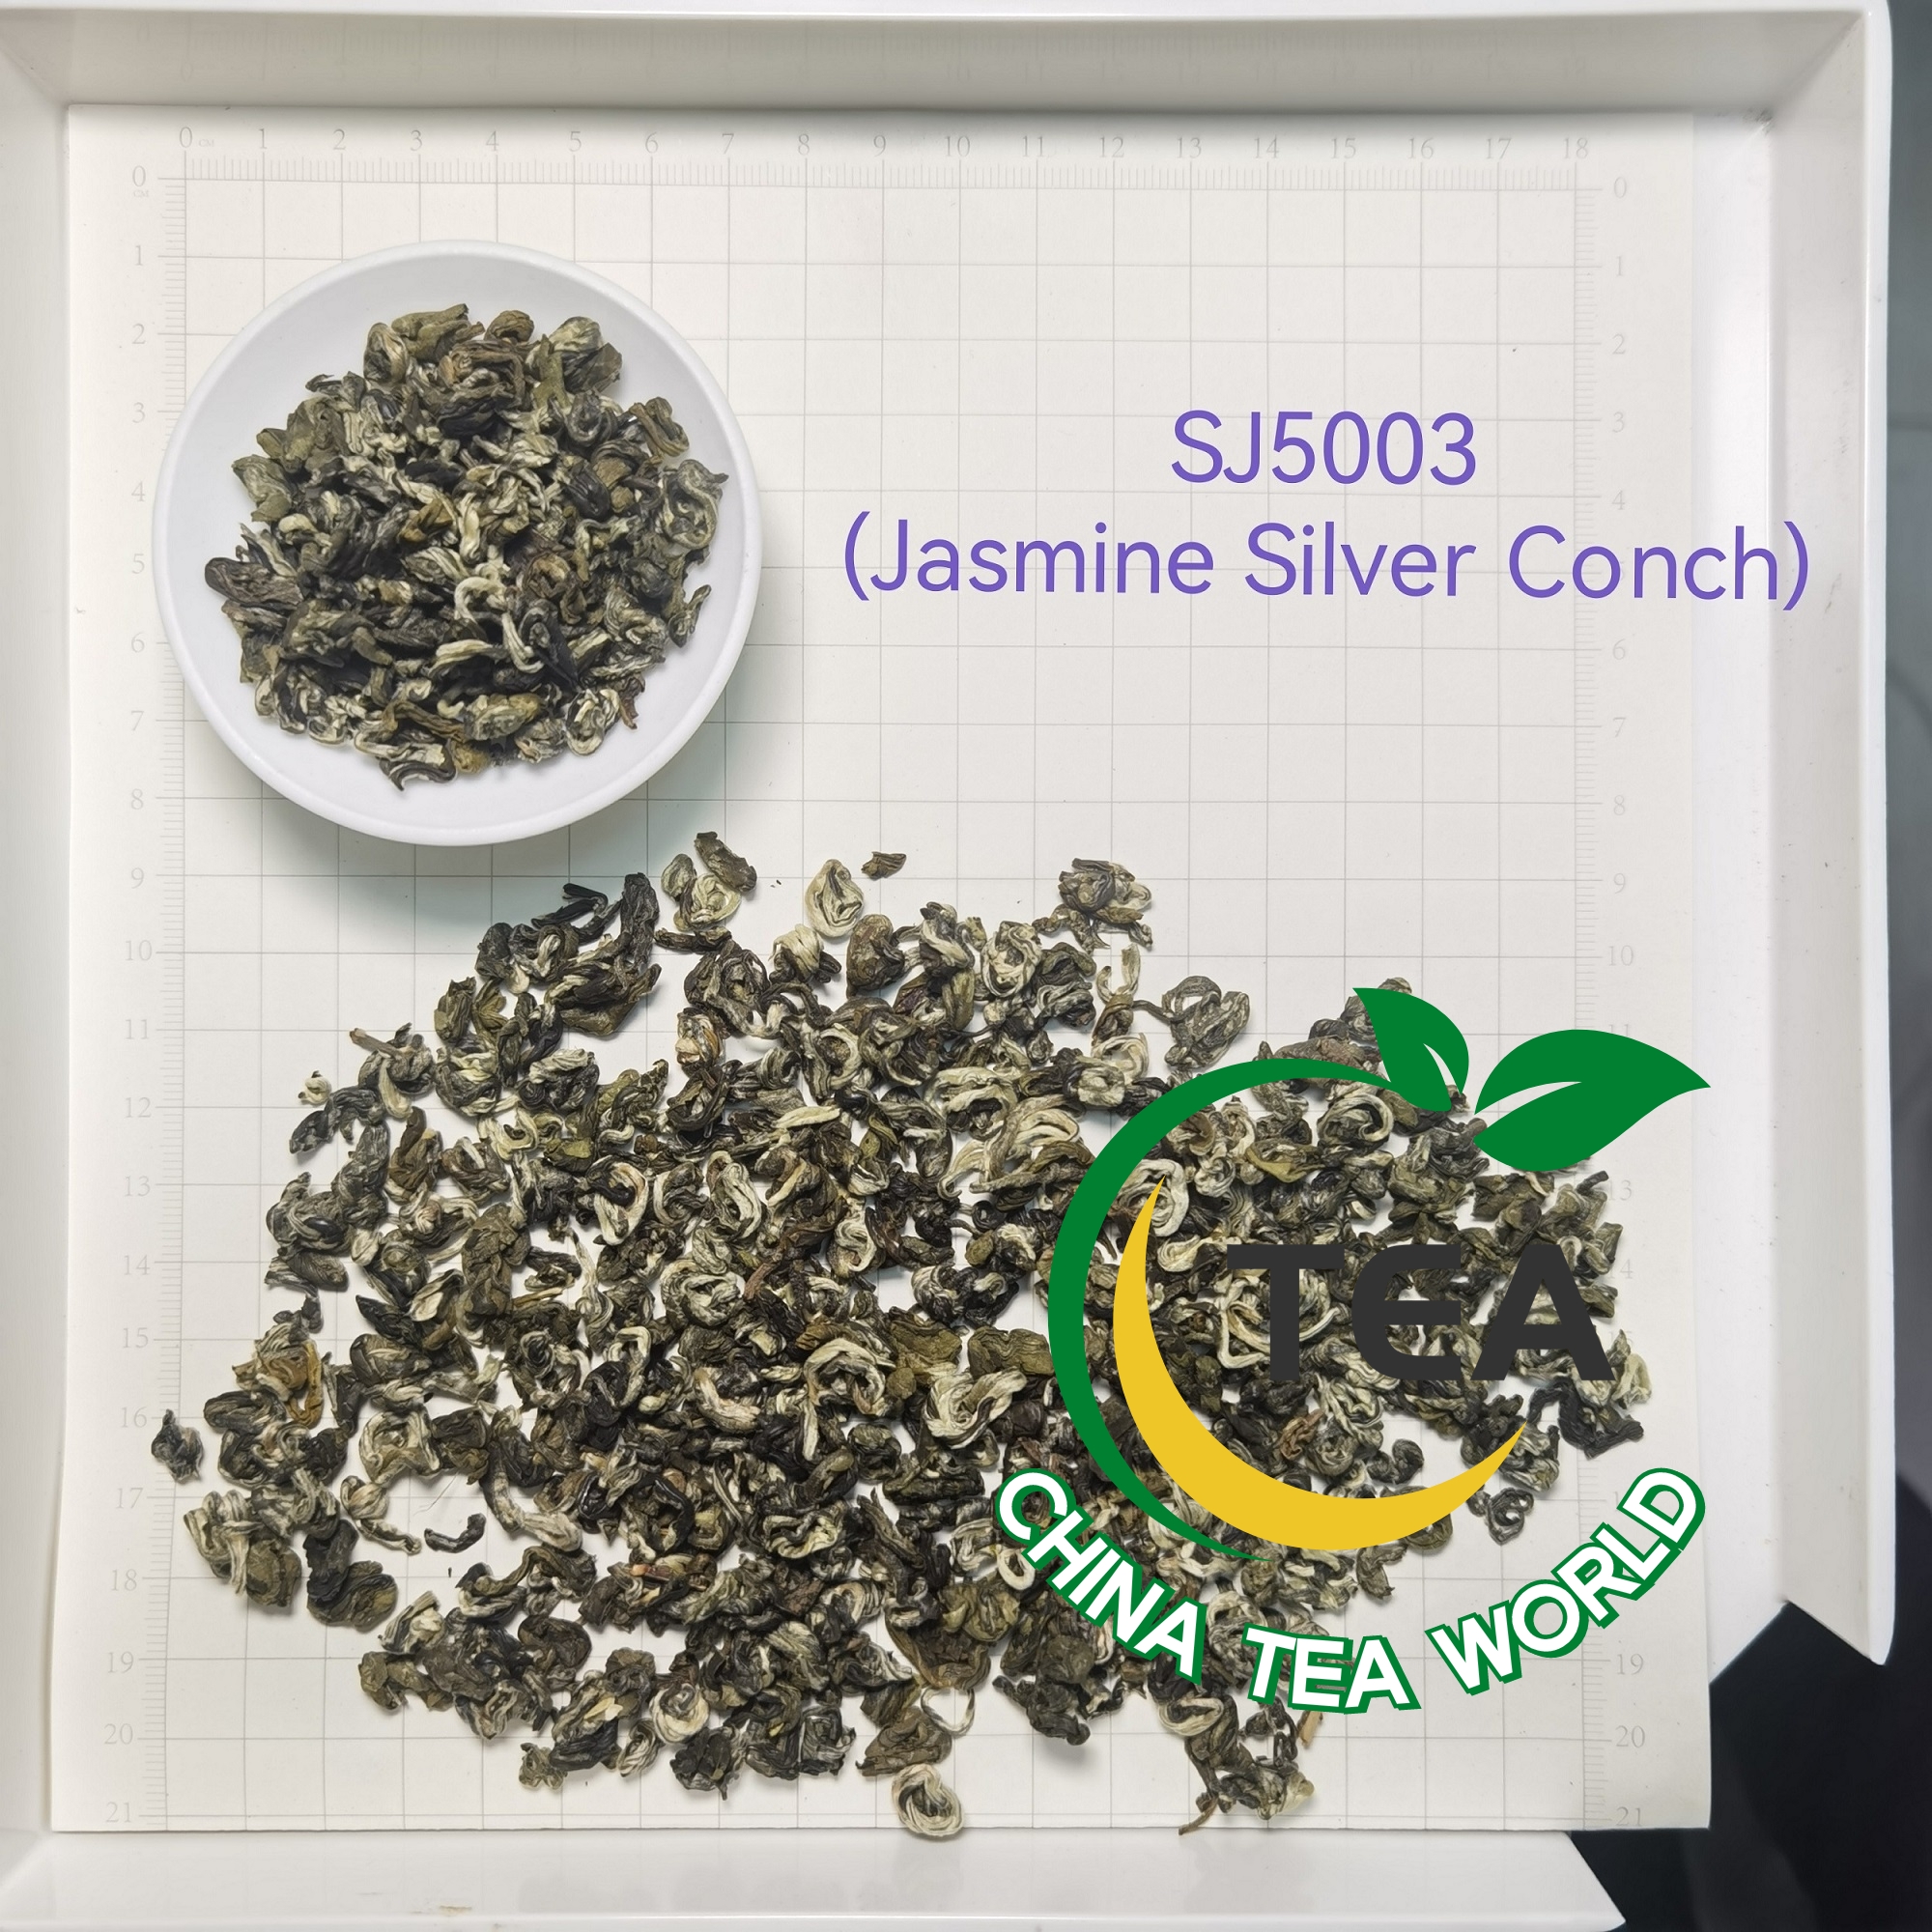 Jasmine Silver Conch